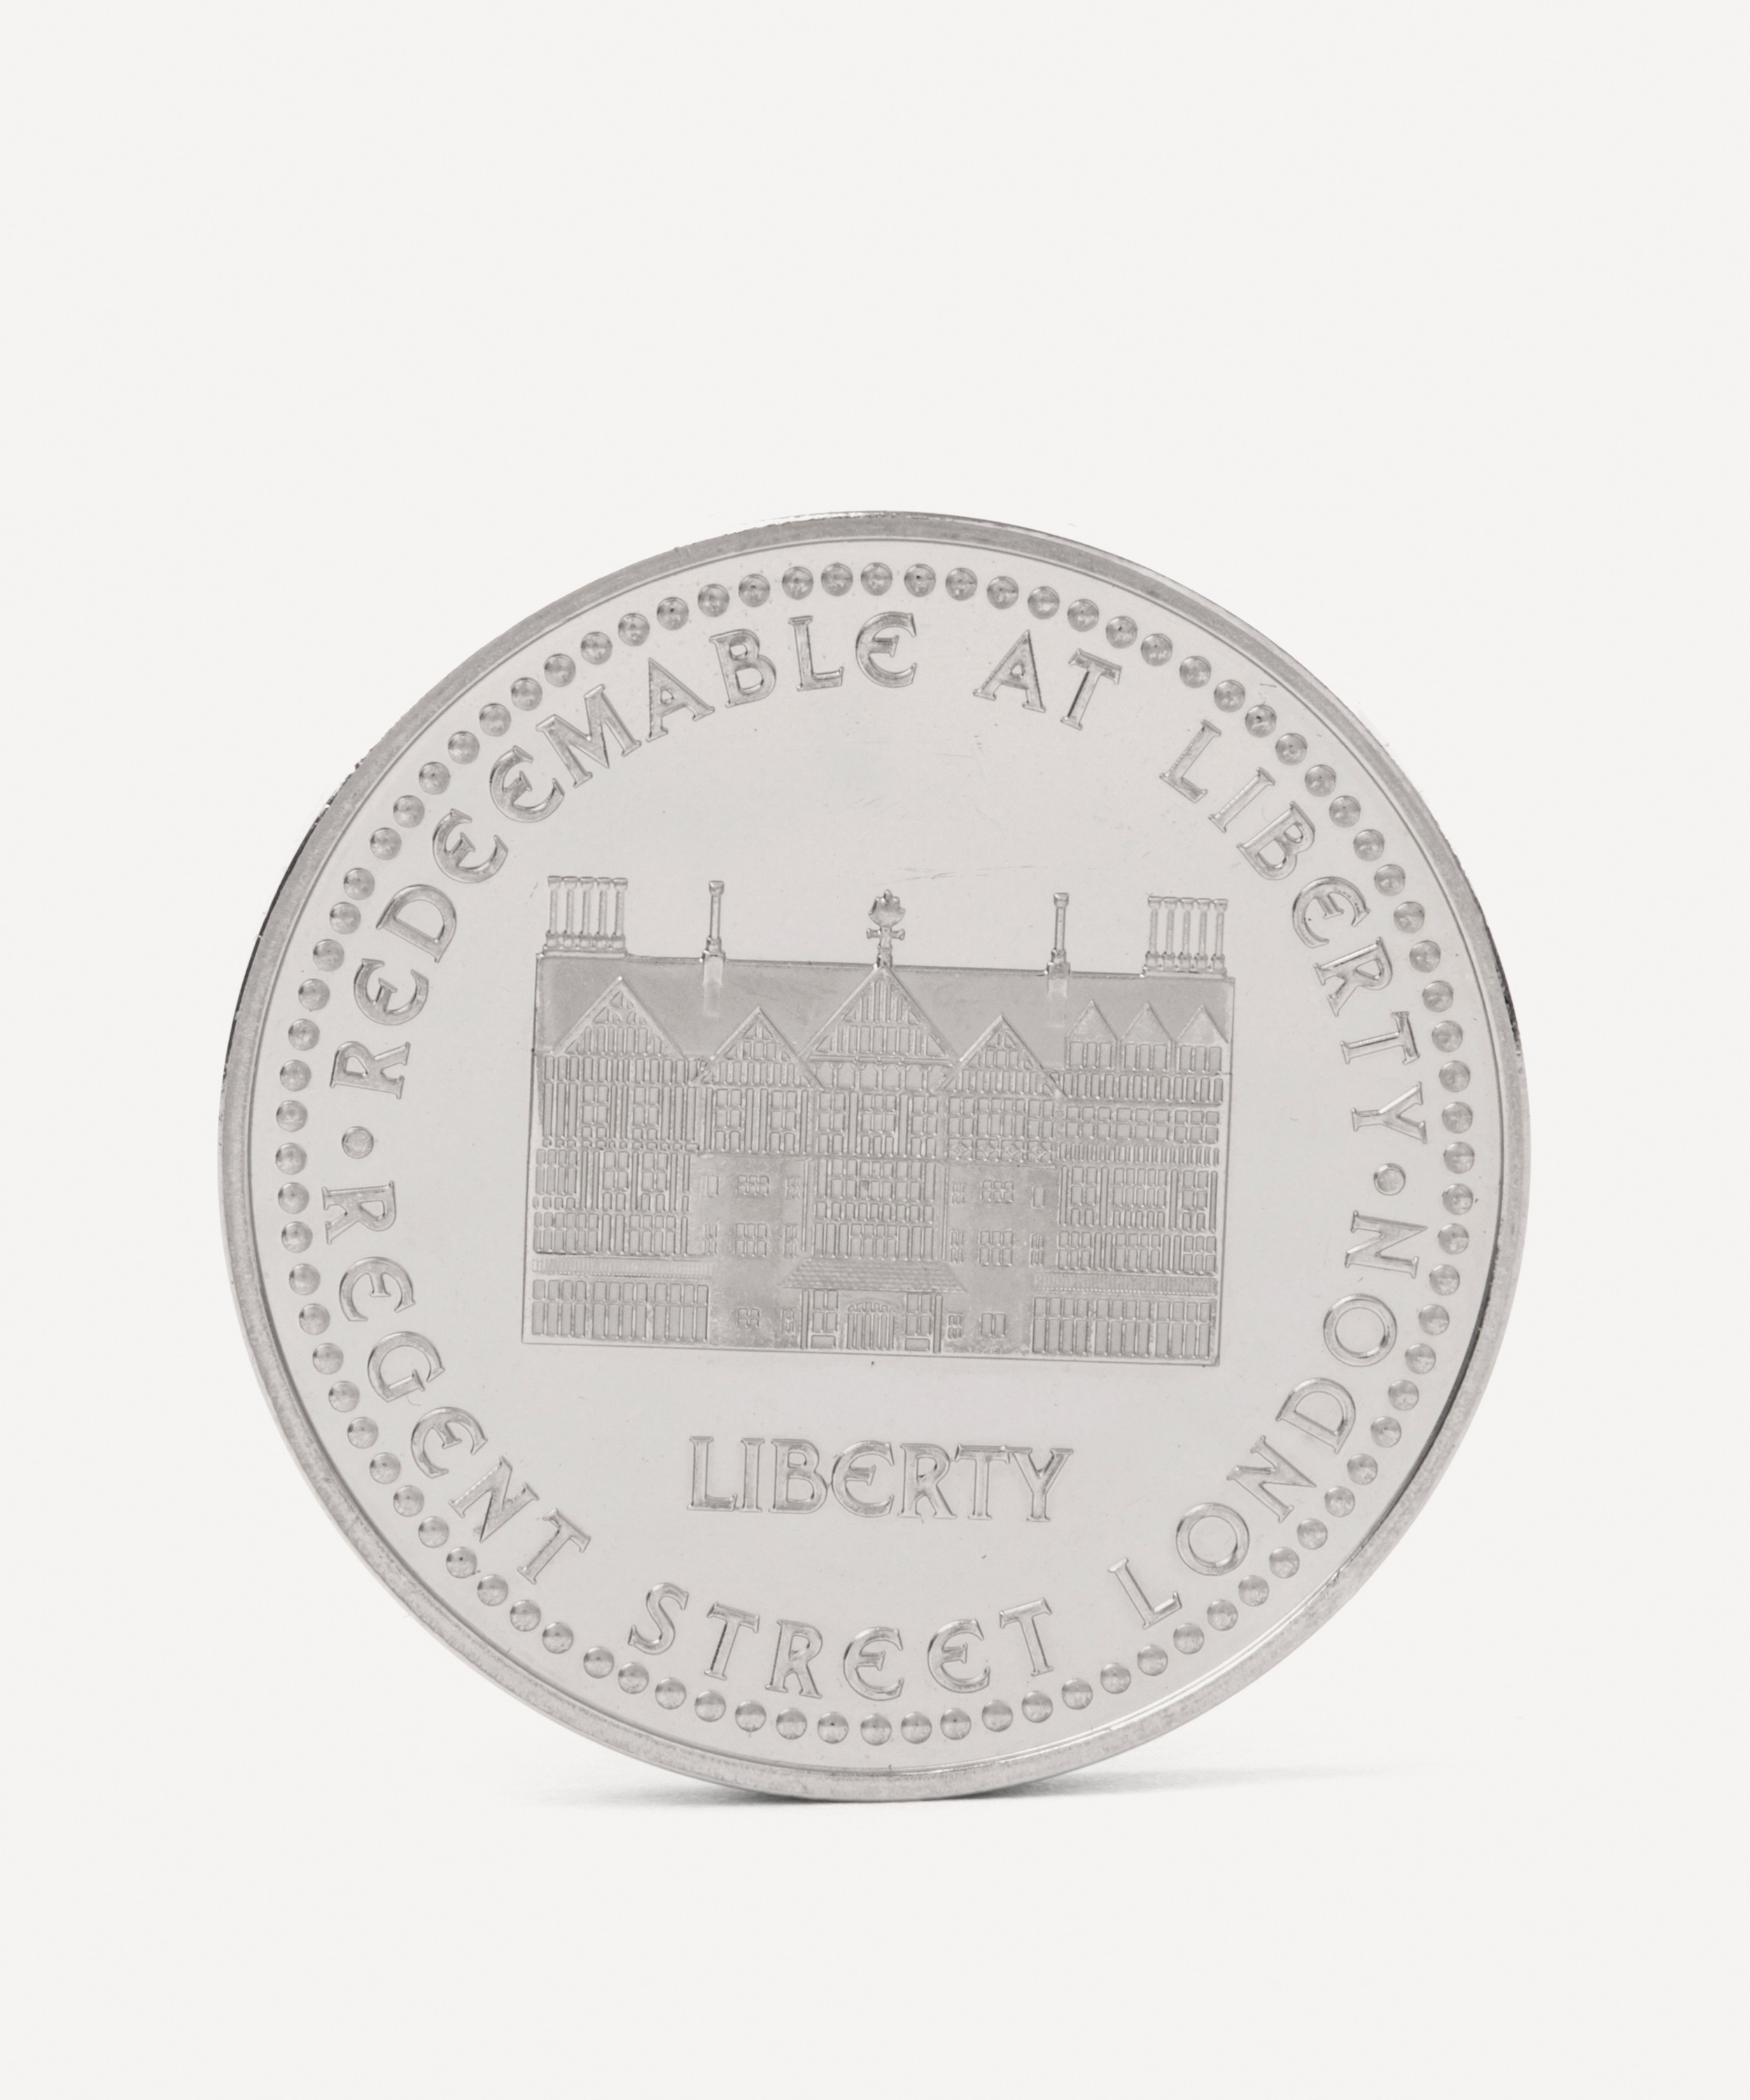 Liberty London - £25 Liberty Gift Coin